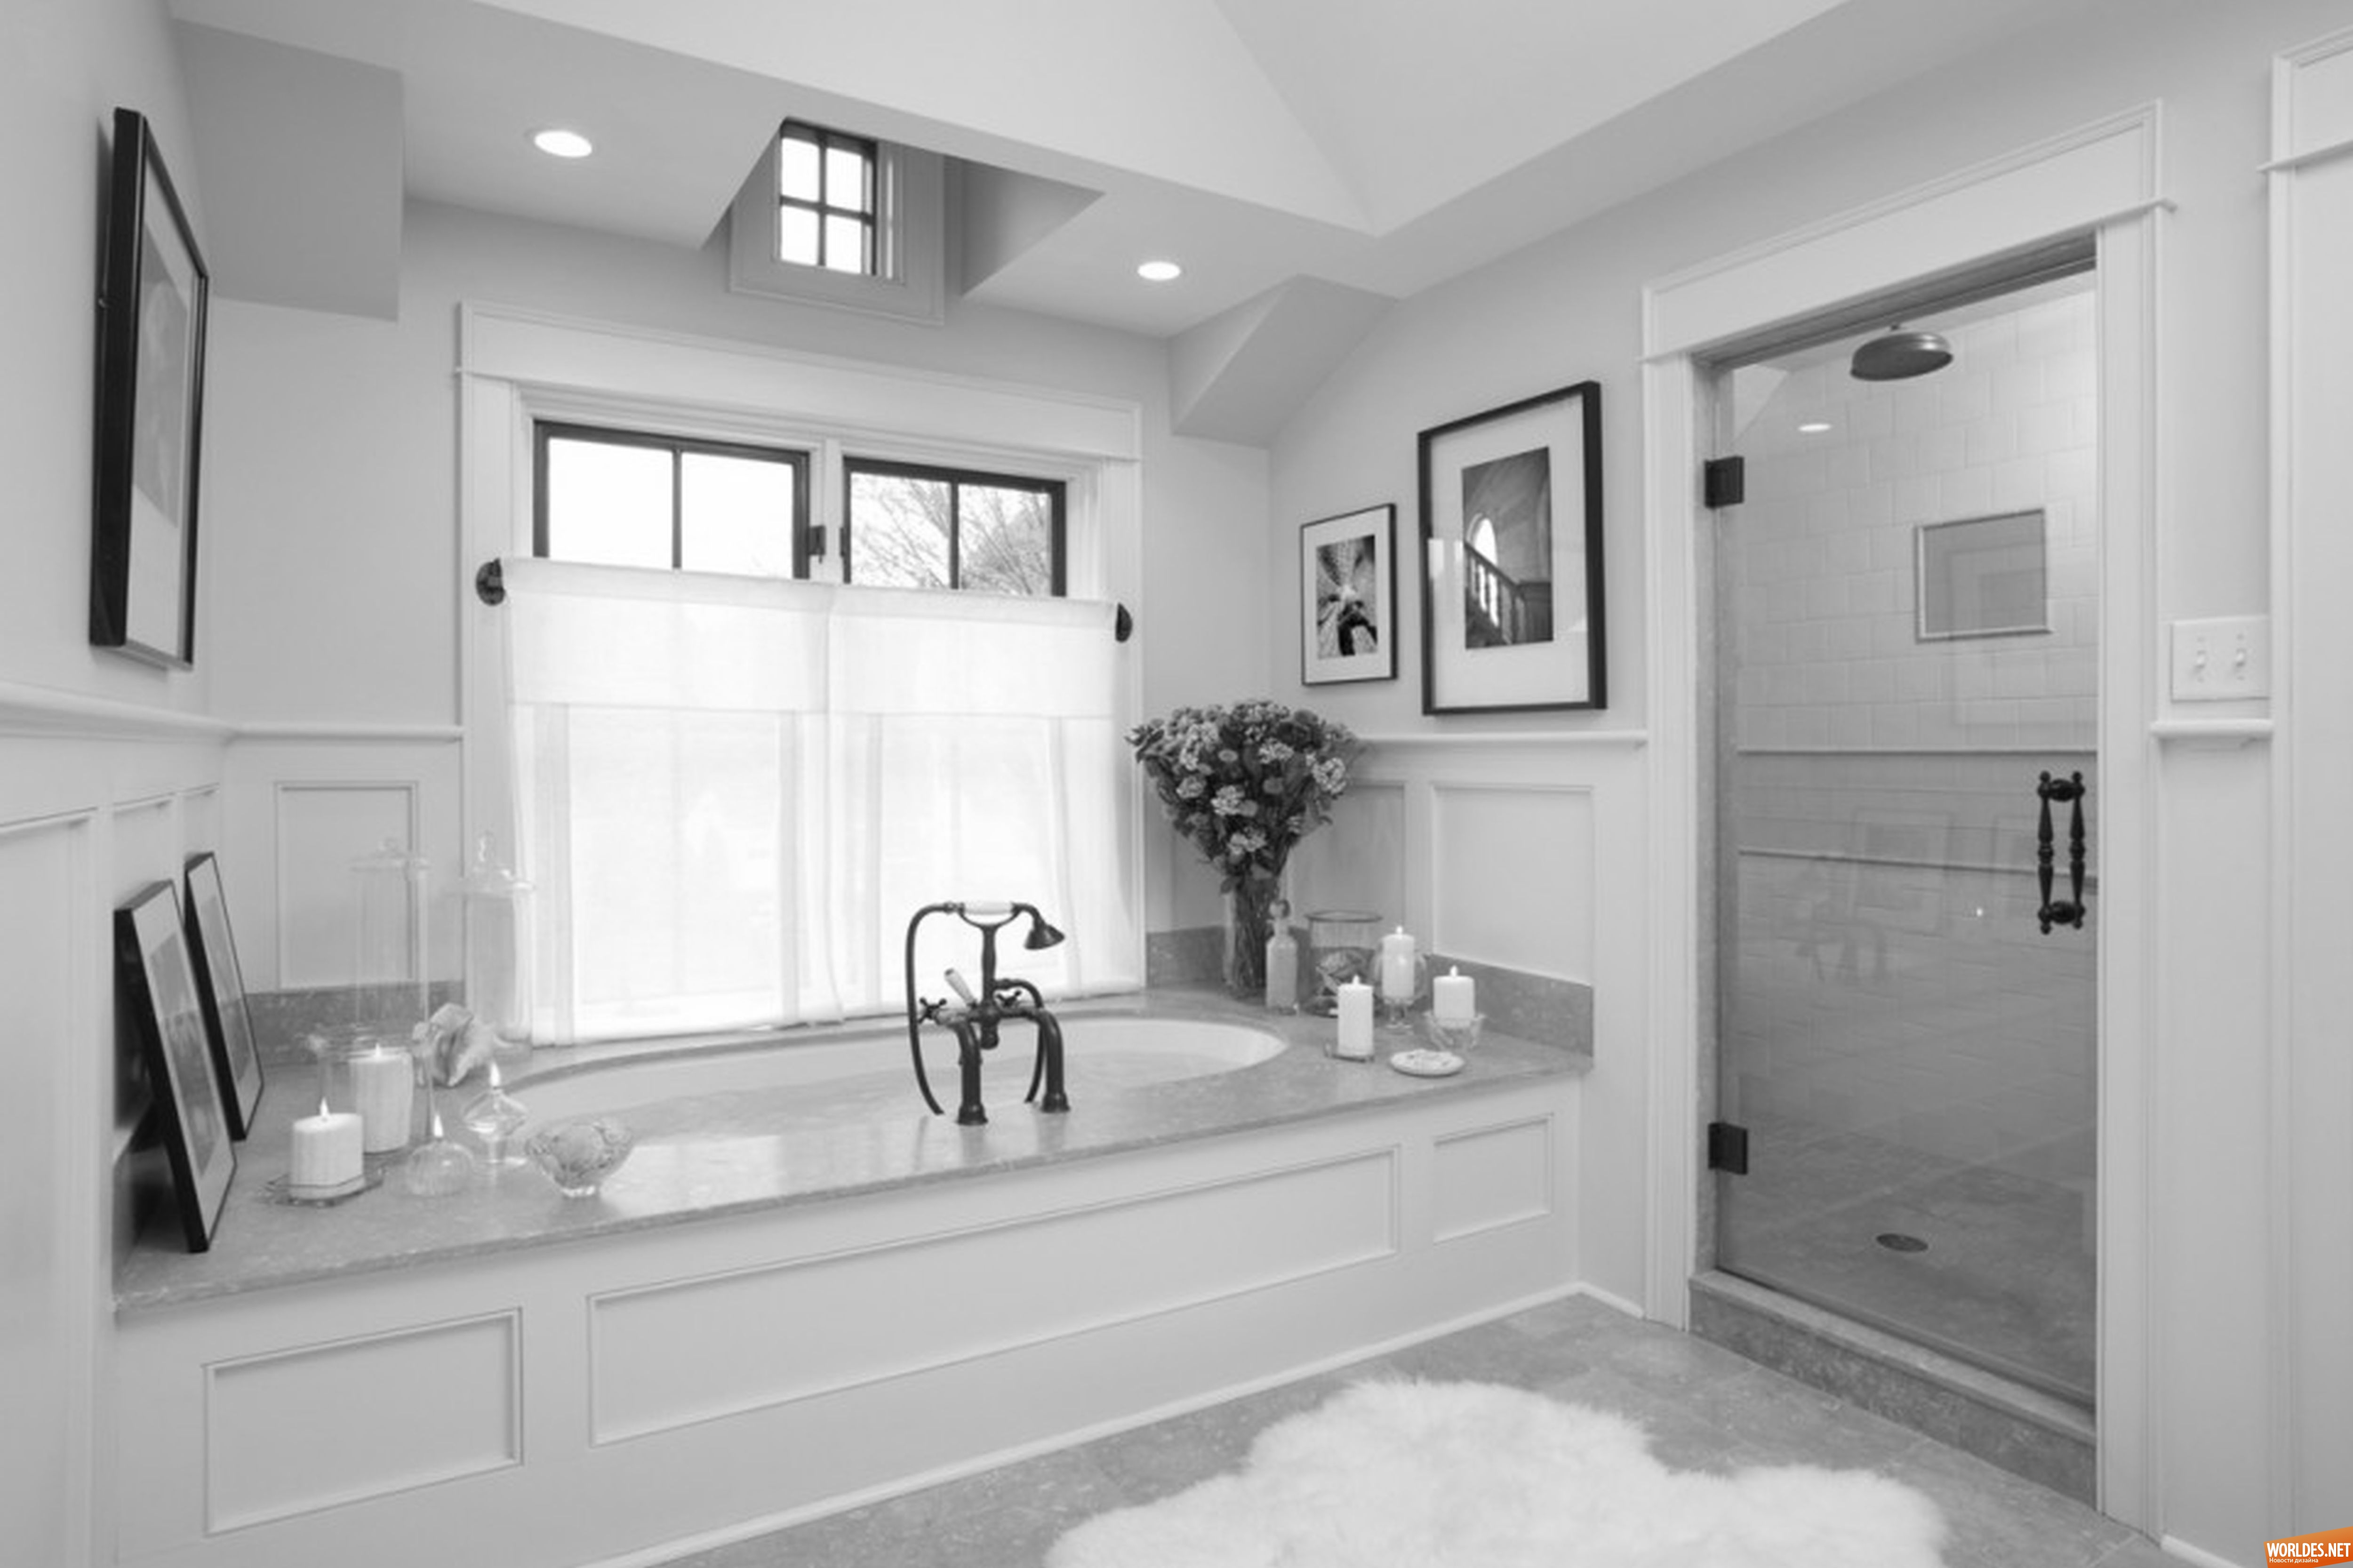 ванные комнаты, белые ванные комнаты, ванные комнаты фото, ванные комнаты в белом цвете, дизайн белых ванных комнат, дизайн белых ванных комнат фото